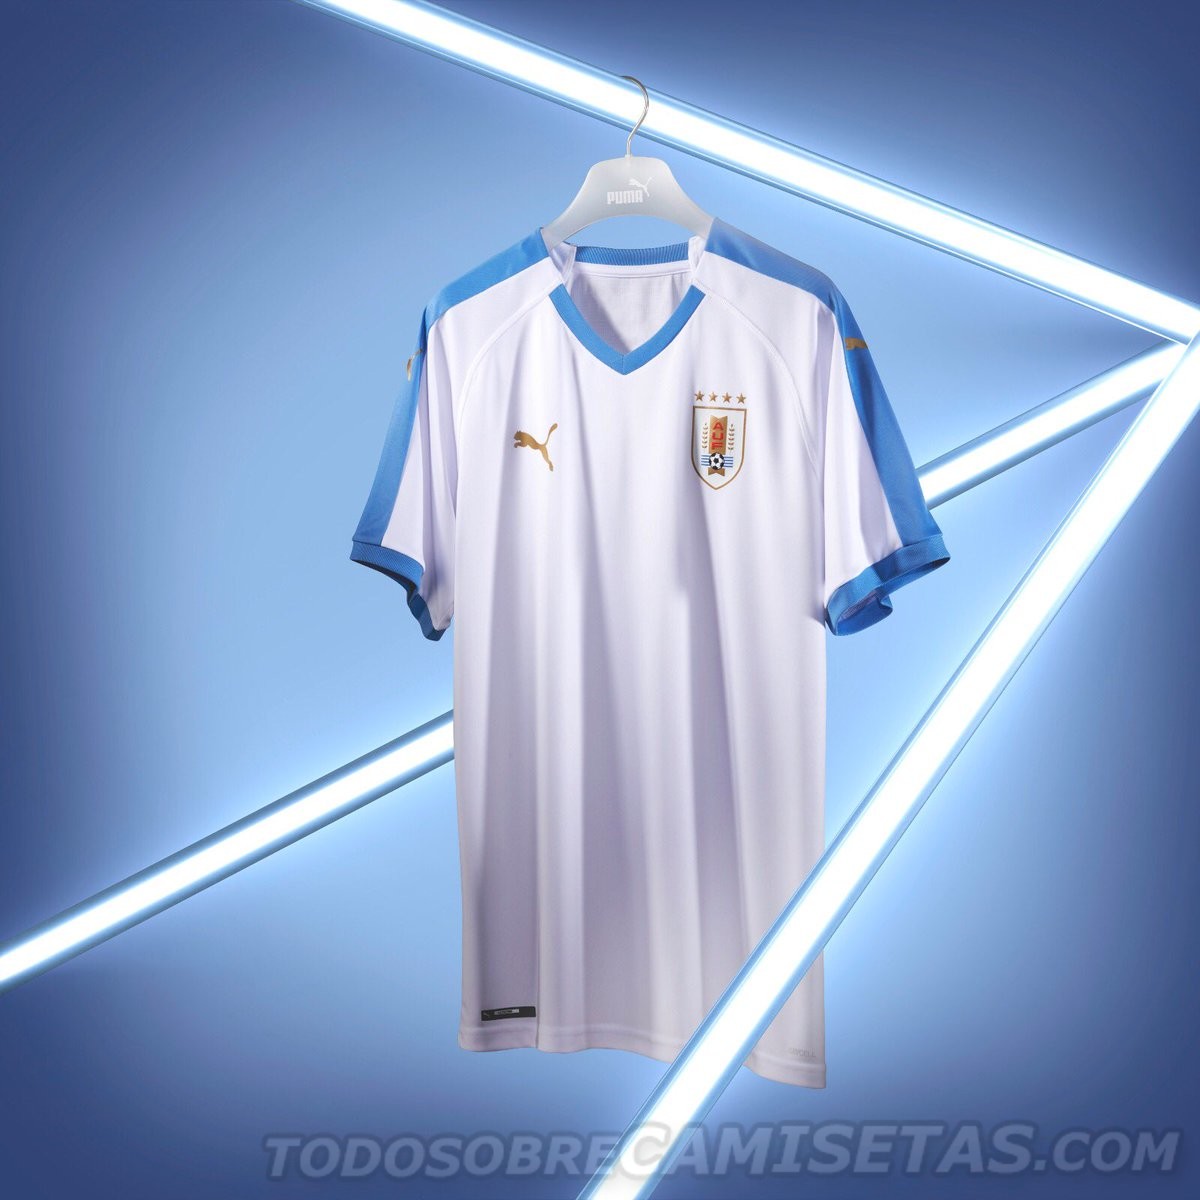 Camisetas PUMA de Uruguay Copa América 2019